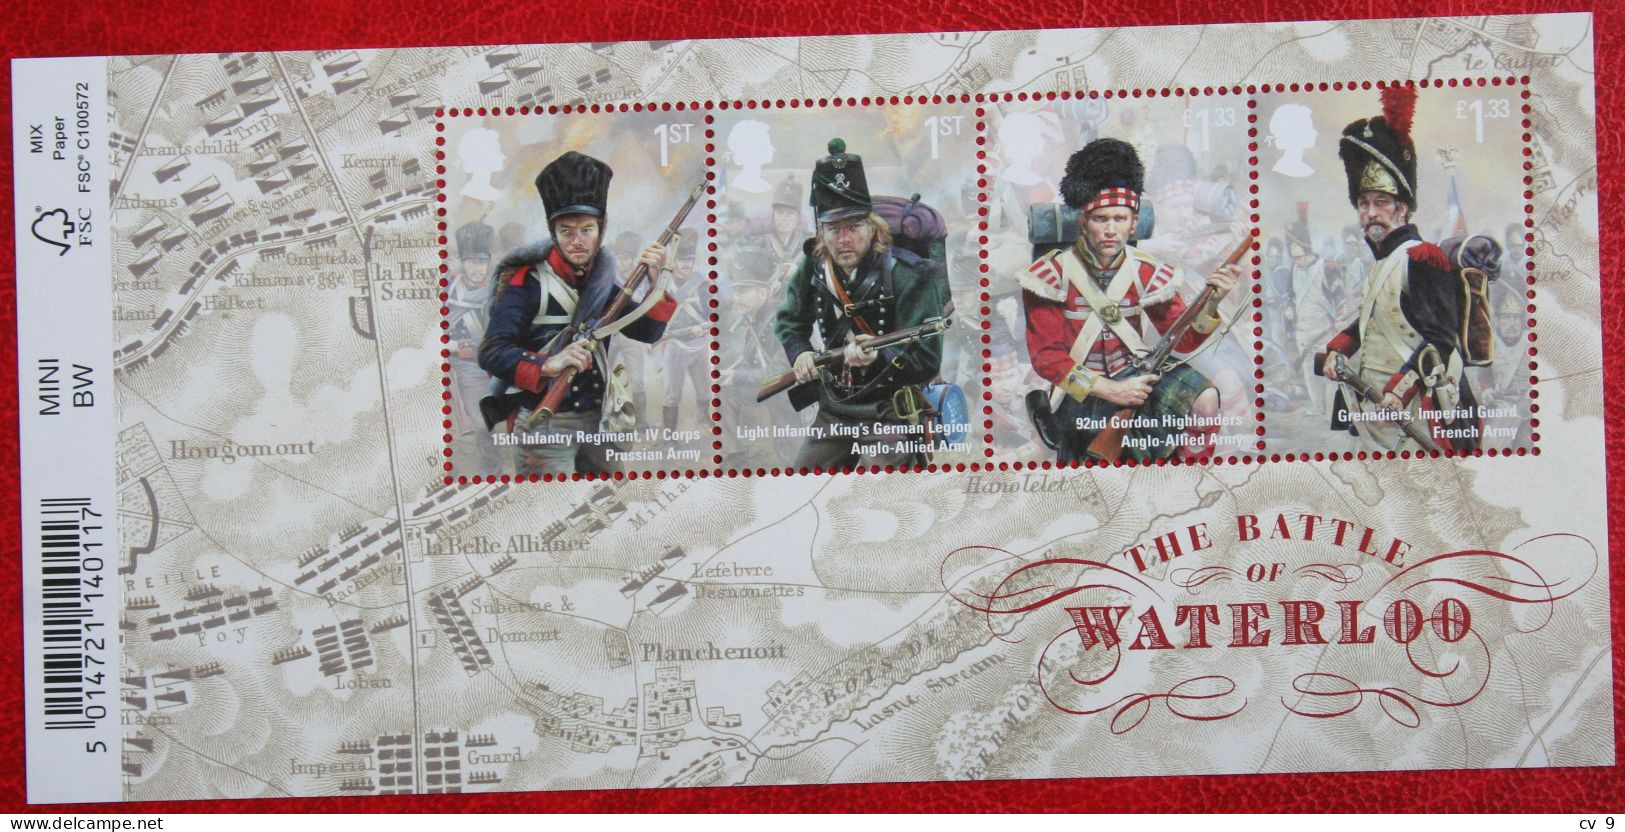 Battle Of Waterloo (Mi 3758-3761 Block 93) 2015 POSTFRIS MNH ** ENGLAND GRANDE-BRETAGNE GB GREAT BRITAIN - Unused Stamps